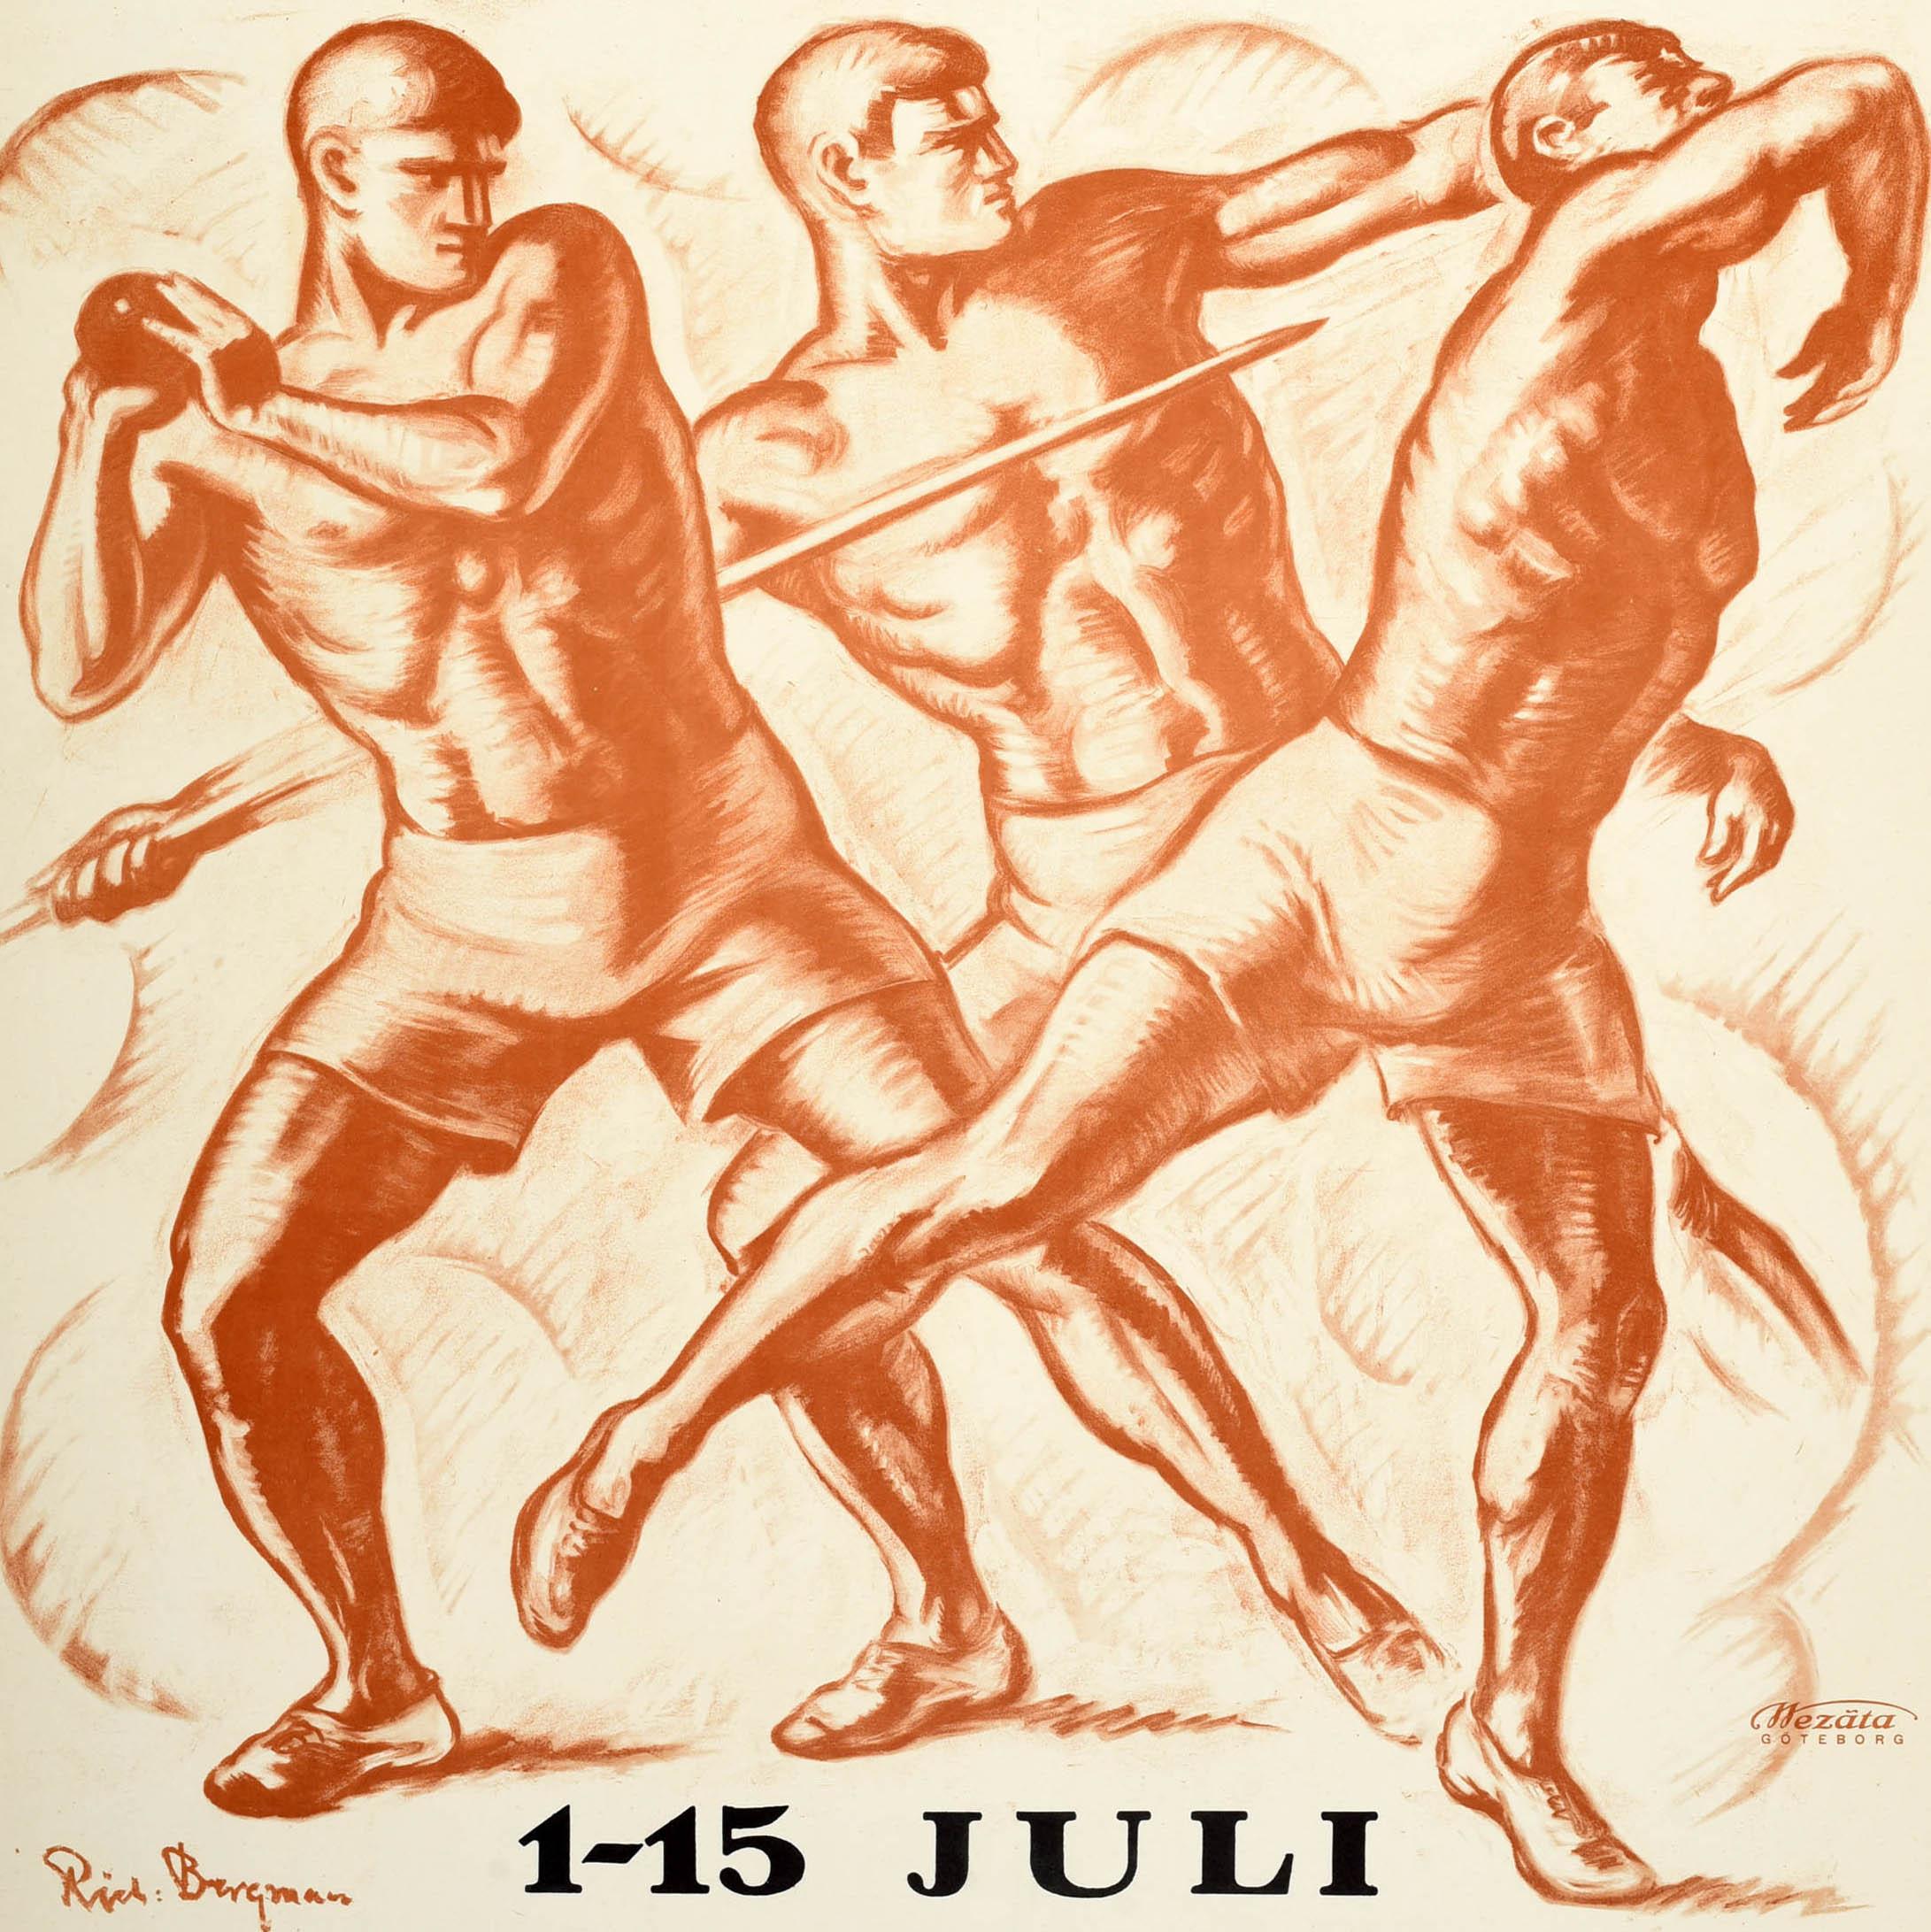 Original Vintage Sport Poster Swedish Fighting Games Gothenburg 1923 Sweden - Print by Rich Bergman